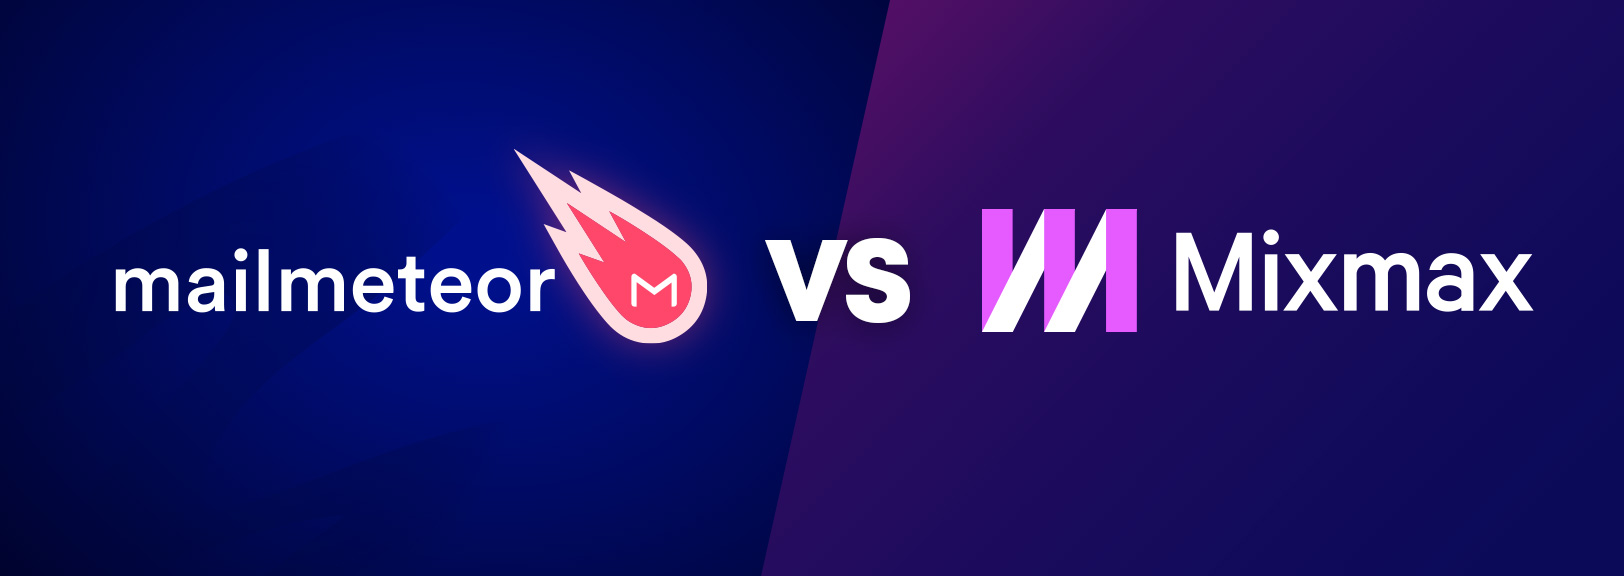 Mailmeteor vs MixMax